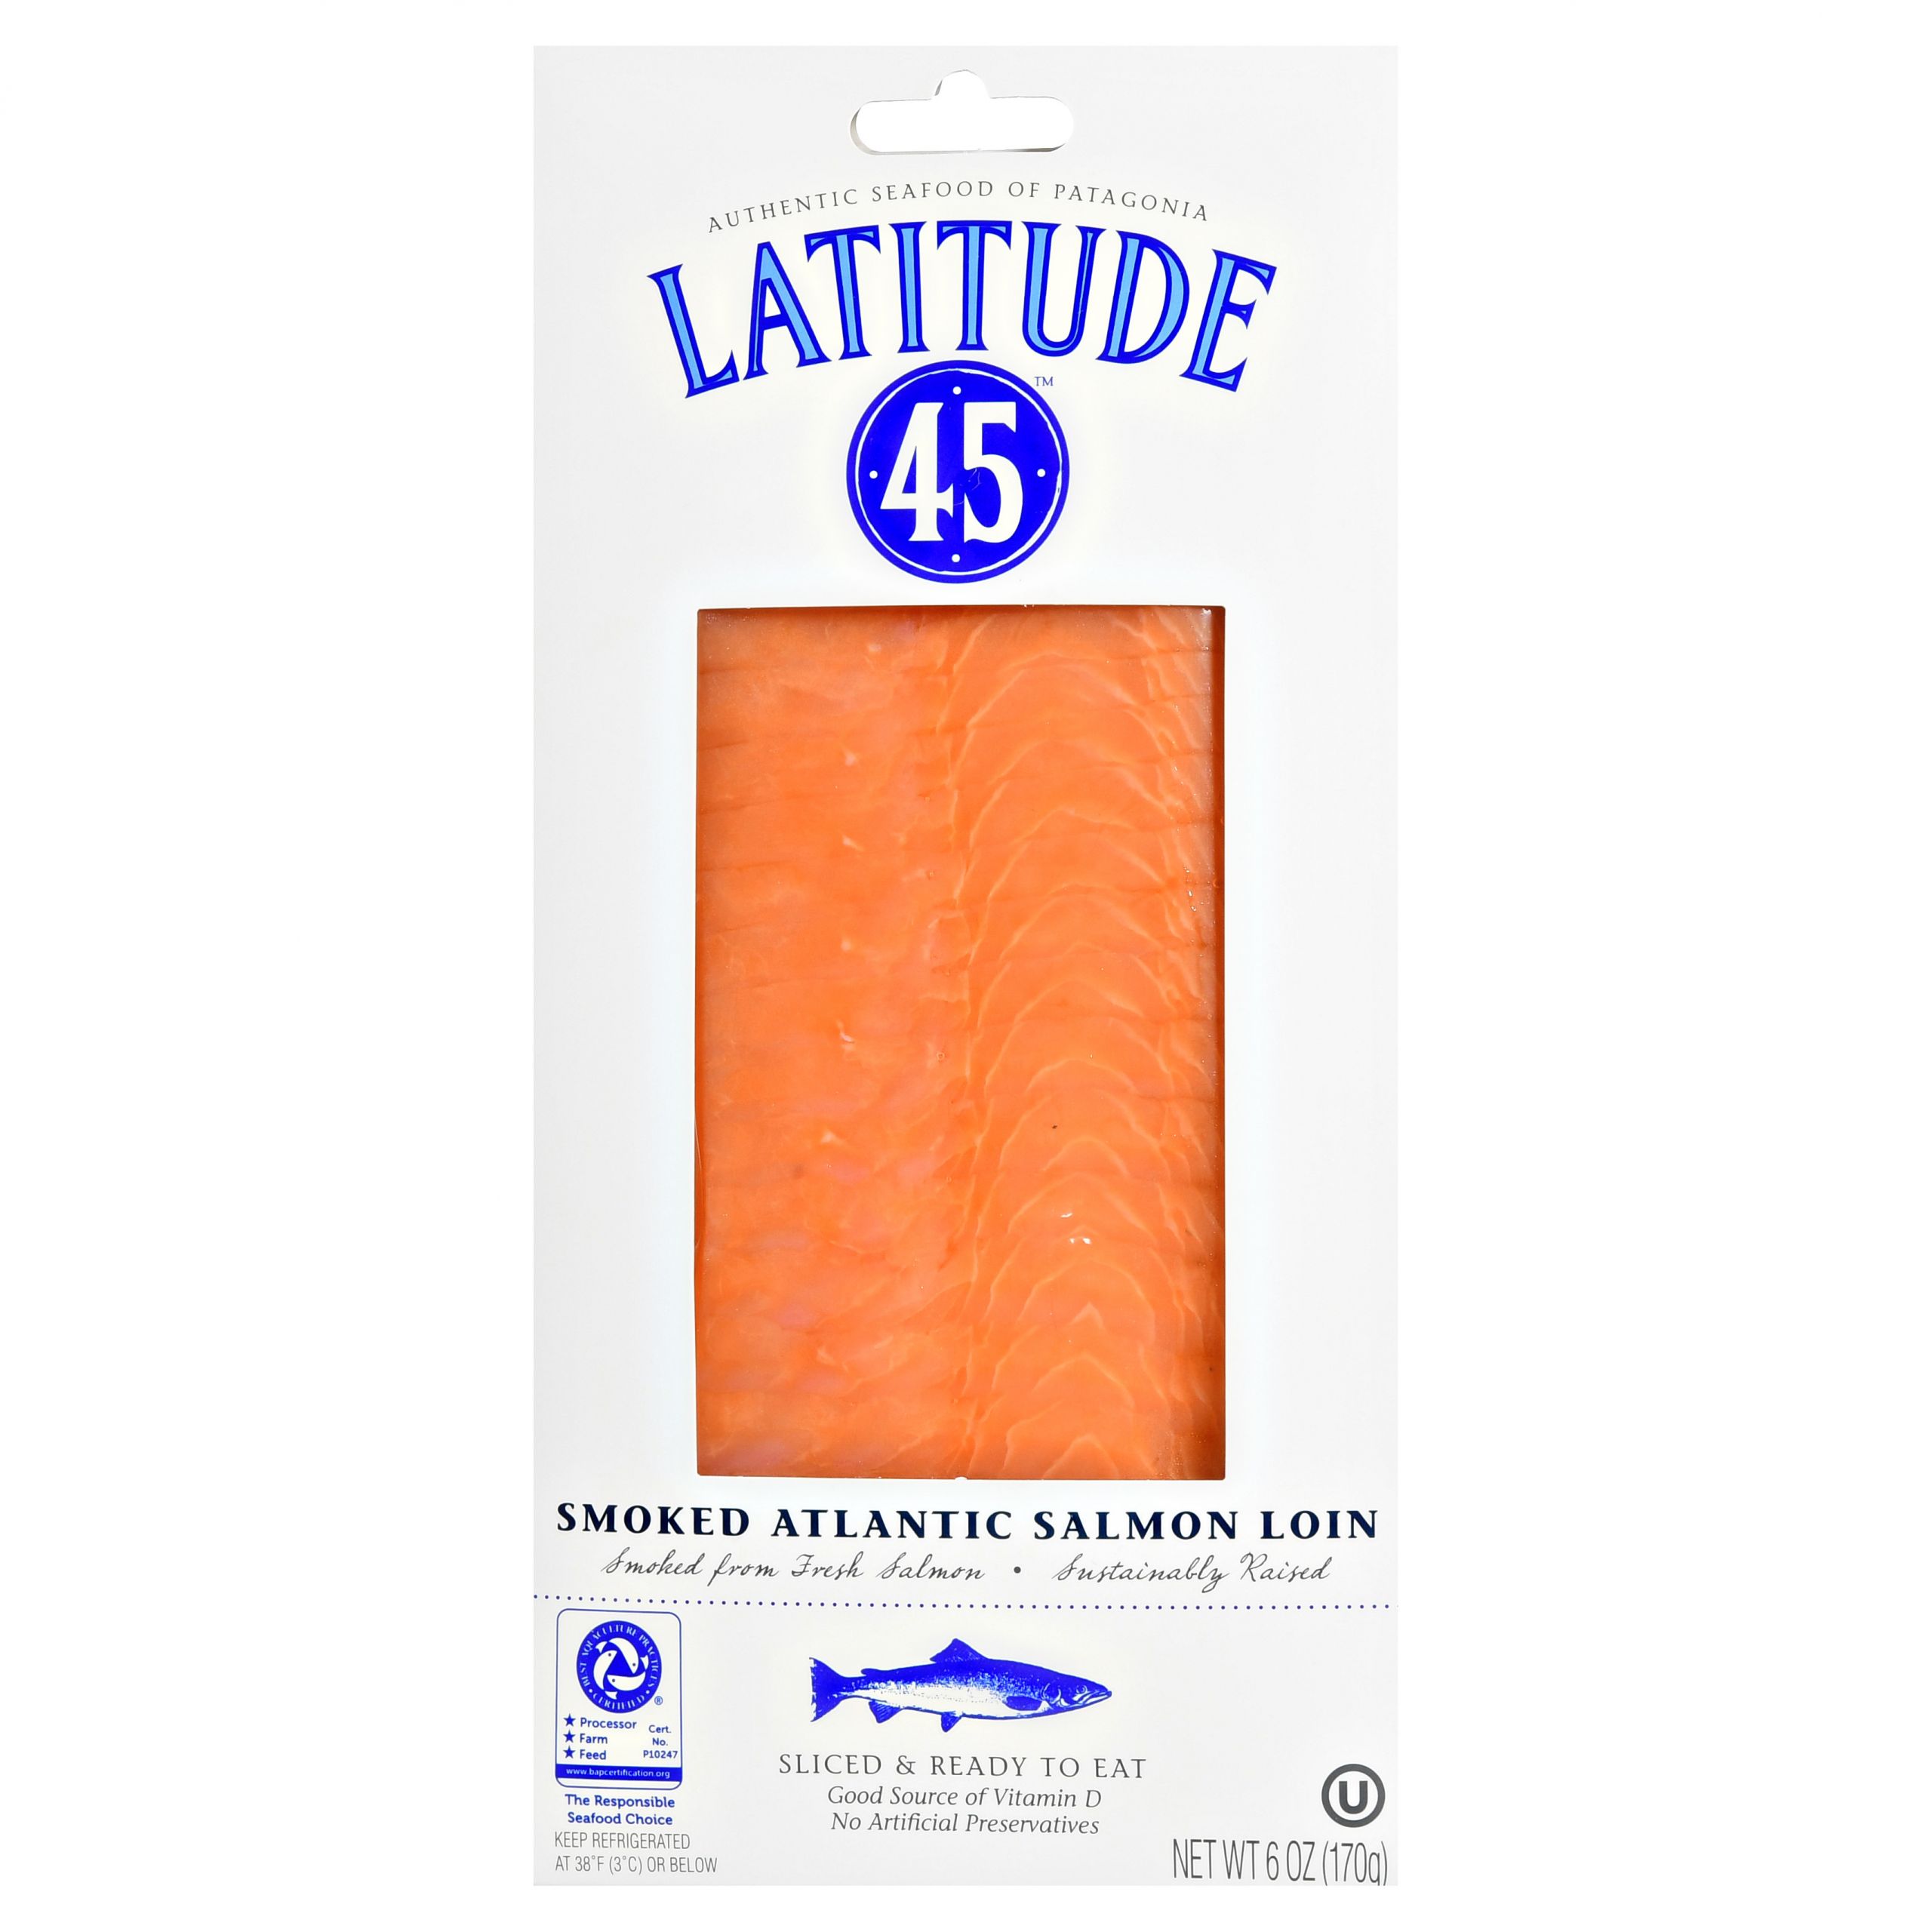 Smoked Salmon Walmart Inspirational Latitude 45 Smoked atlantic Salmon Loin 6 Oz Walmart